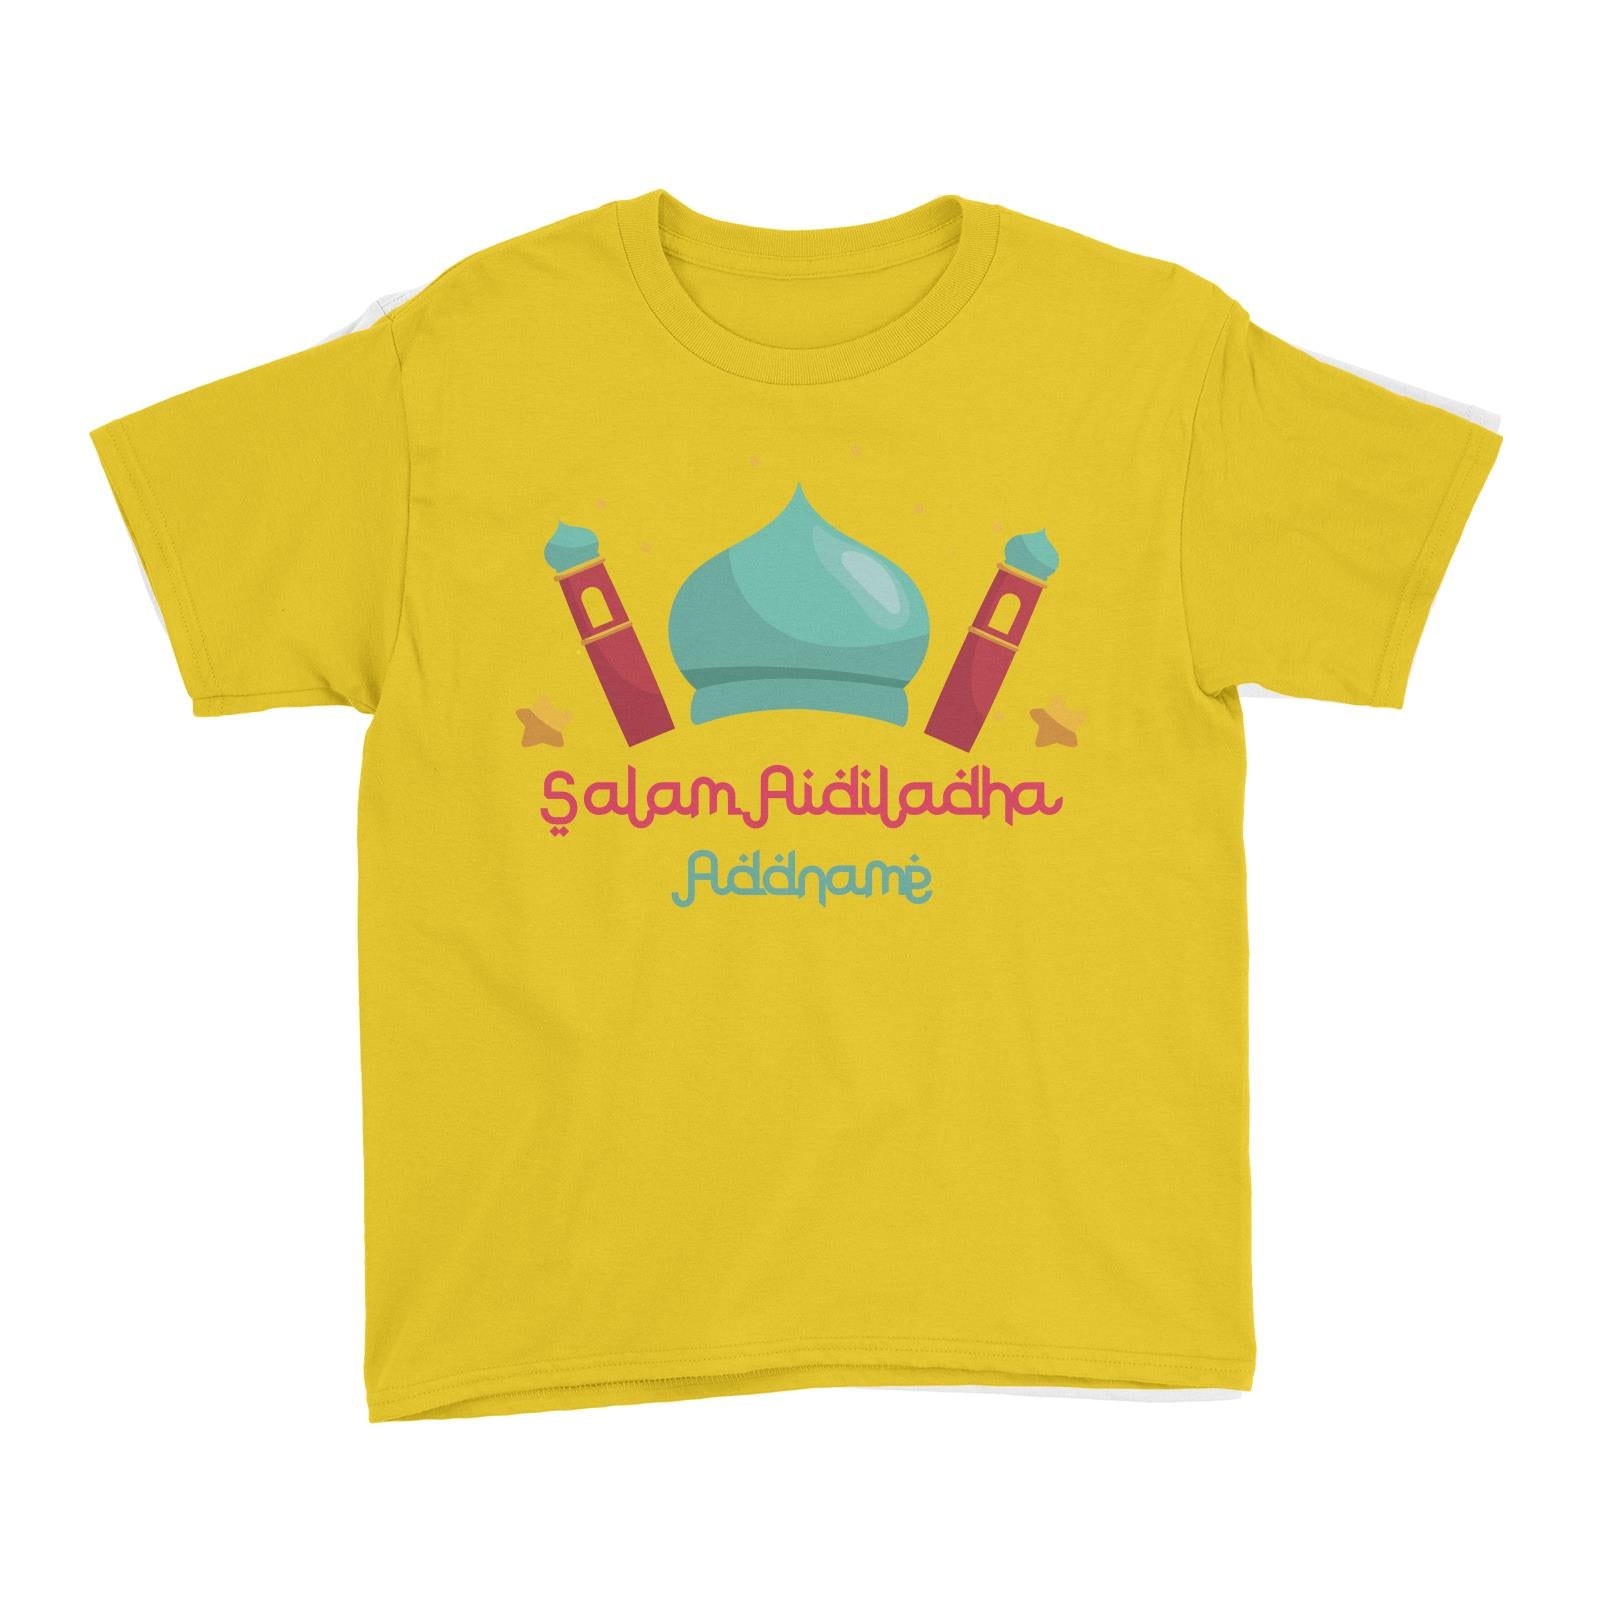 Aidiladha Cute Mosque Dome Addname Kid's T-Shirt